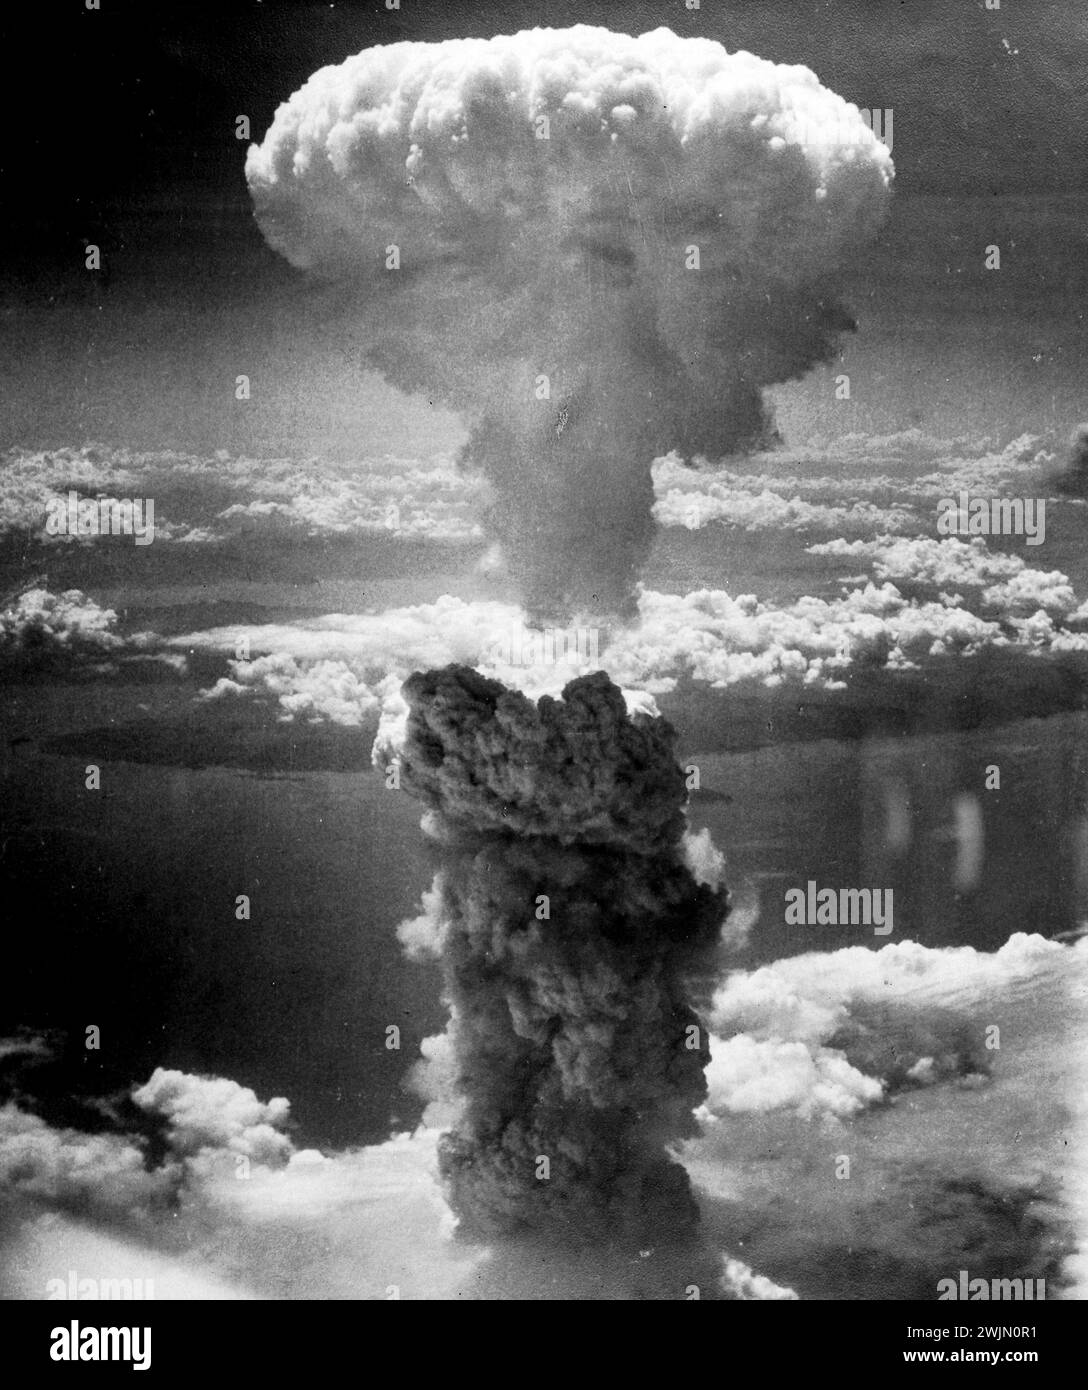 Atomic Bomb disaster, Japan - Nagasaki bomb 1945 - Atomic Cloud Rises Over Nagasaki Stock Photo